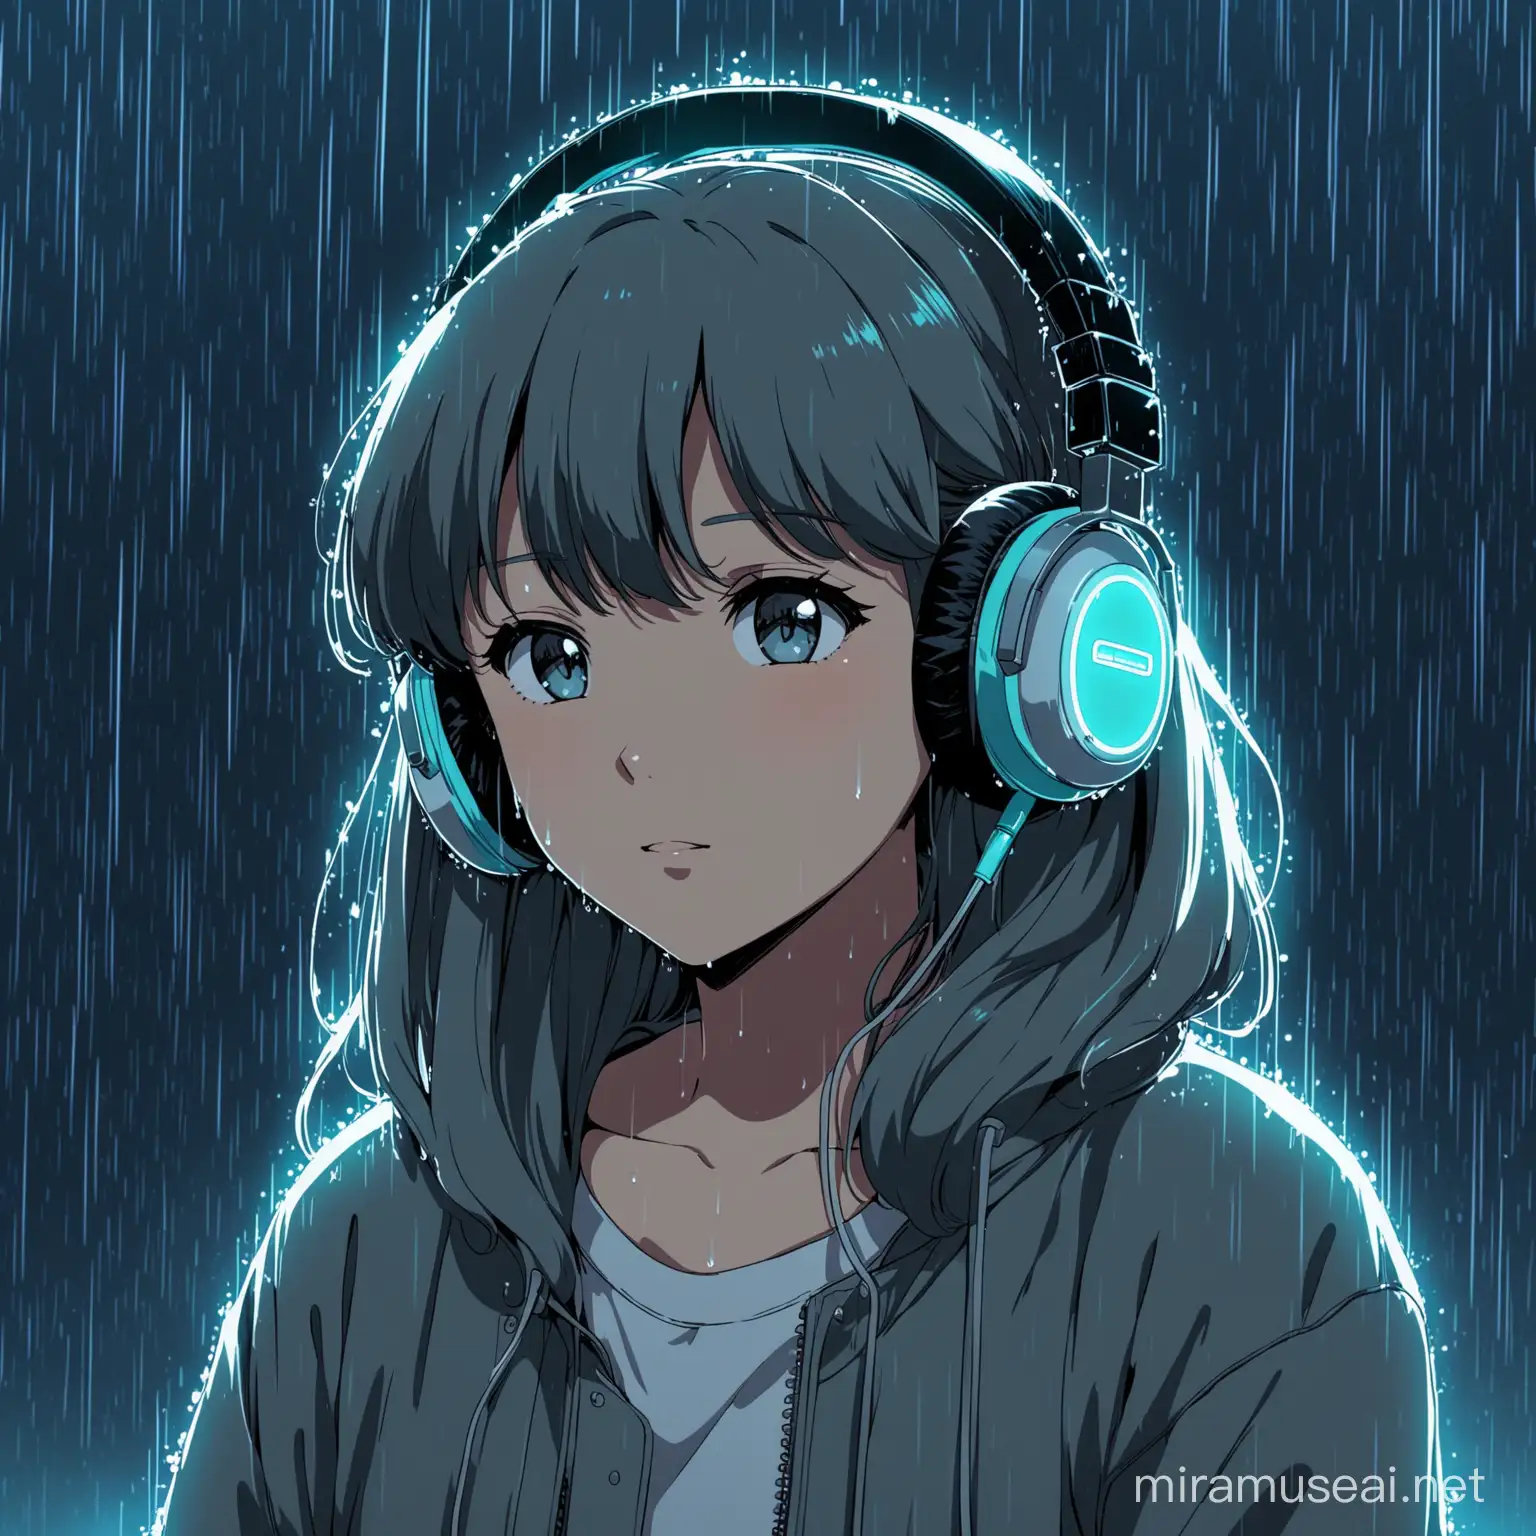 /imagine prompt: anime::1 1980s::1 nightclublighting::1 neon::1 gray::1 --v 4 listening music lofi headphones, gray colors, rain. 1980s anime style